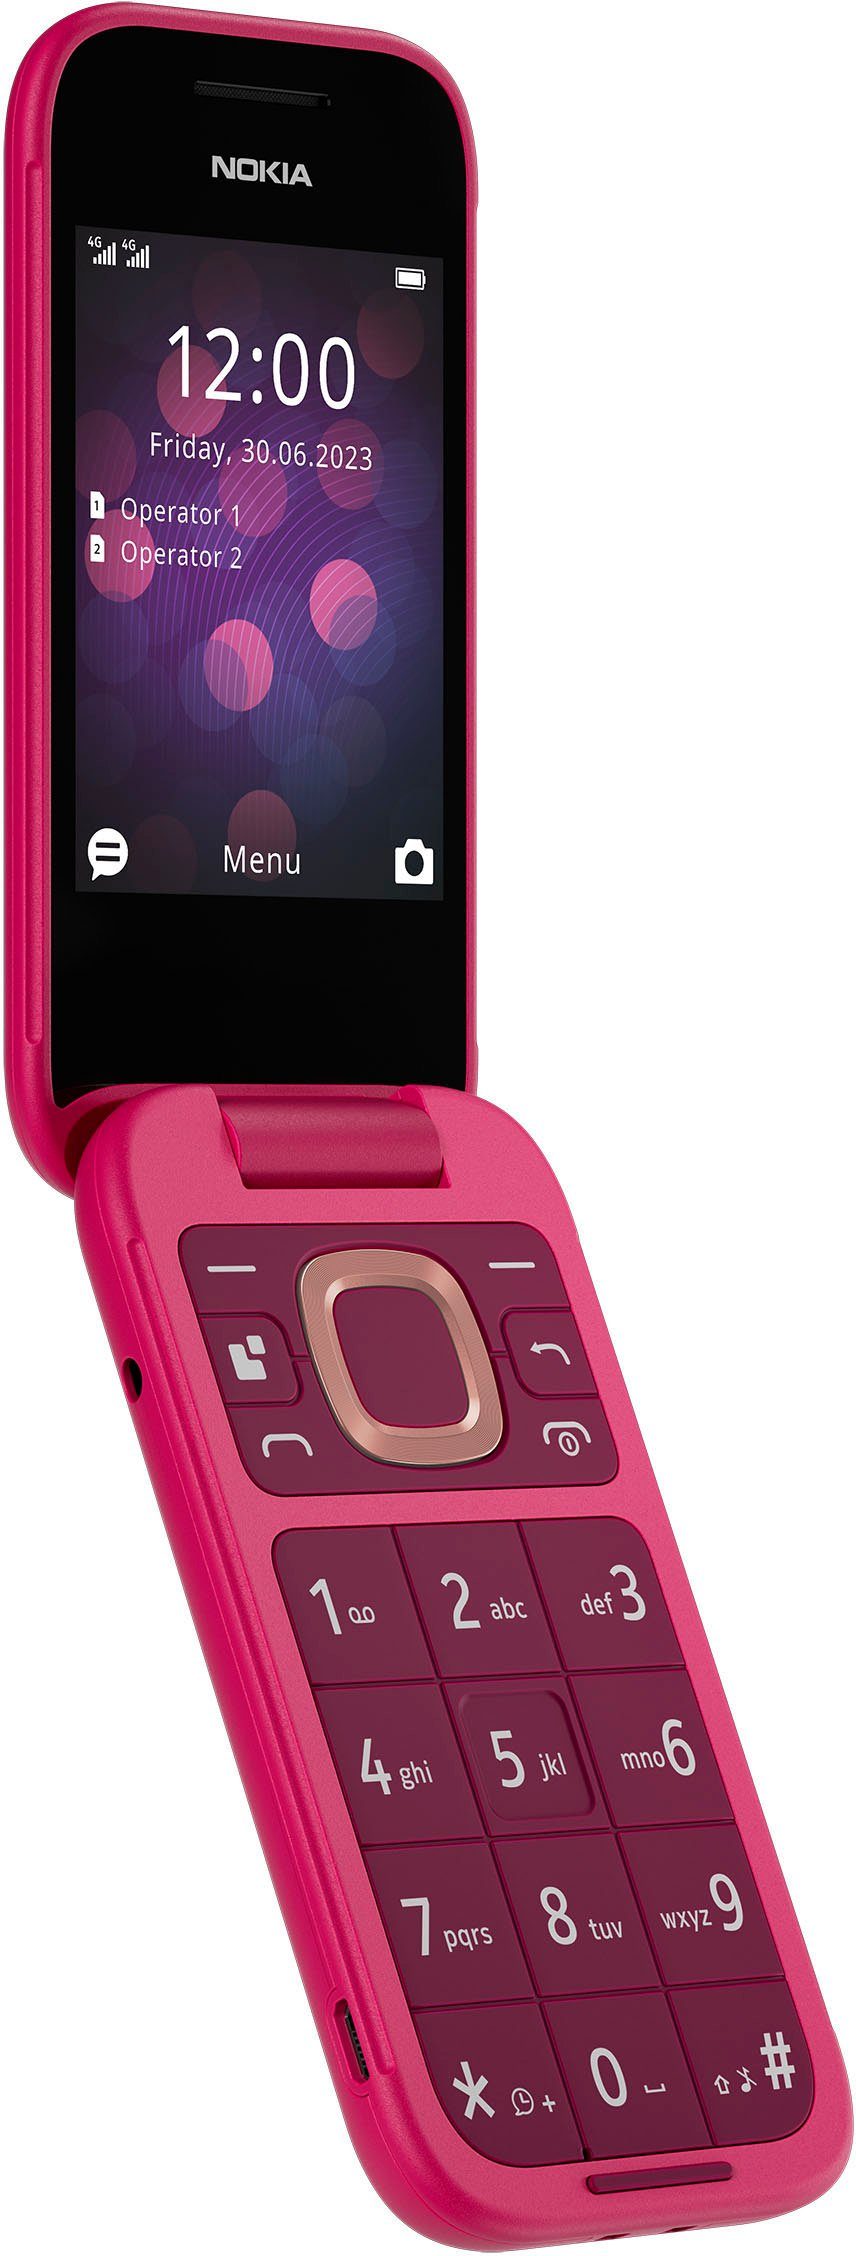 Nokia 2660 Flip GB cm/2,8 MP (7,11 0,3 Speicherplatz, Klapphandy Kamera) rosa 0,13 Zoll